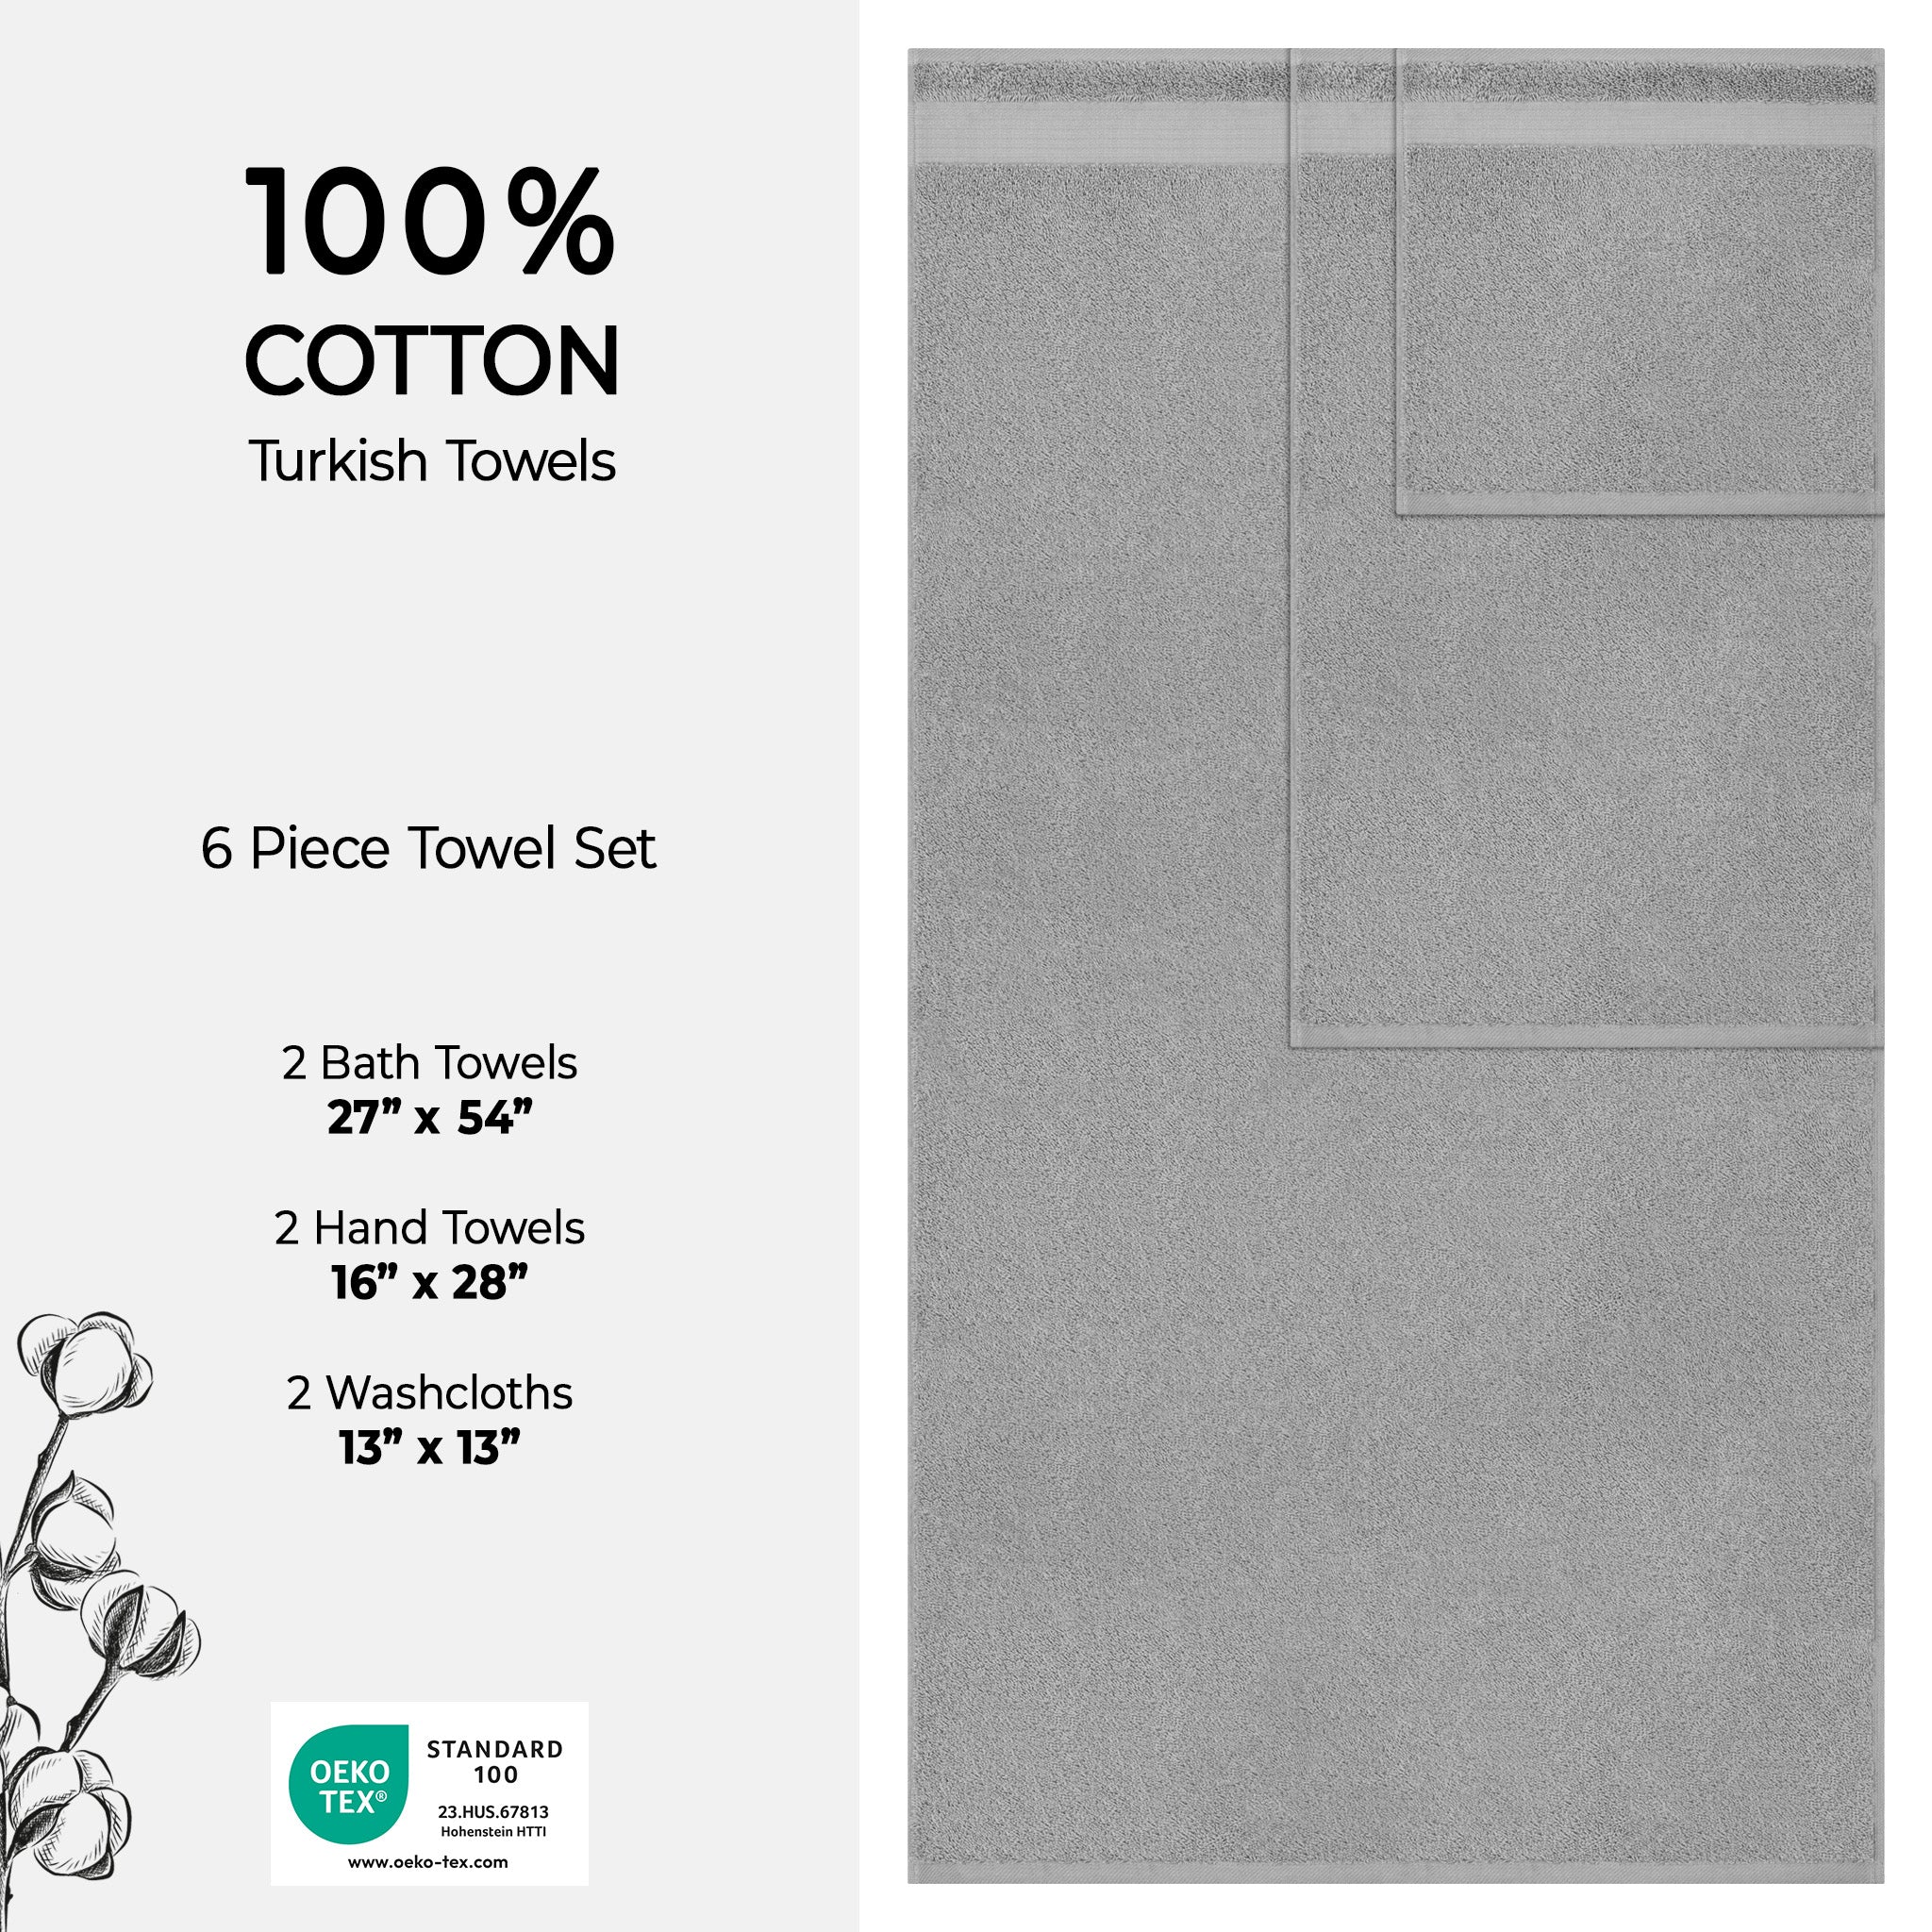 American Soft Linen Bekos 100% Cotton Turkish Towels 6 Piece Bath Towel Set -rockridge-gray-4